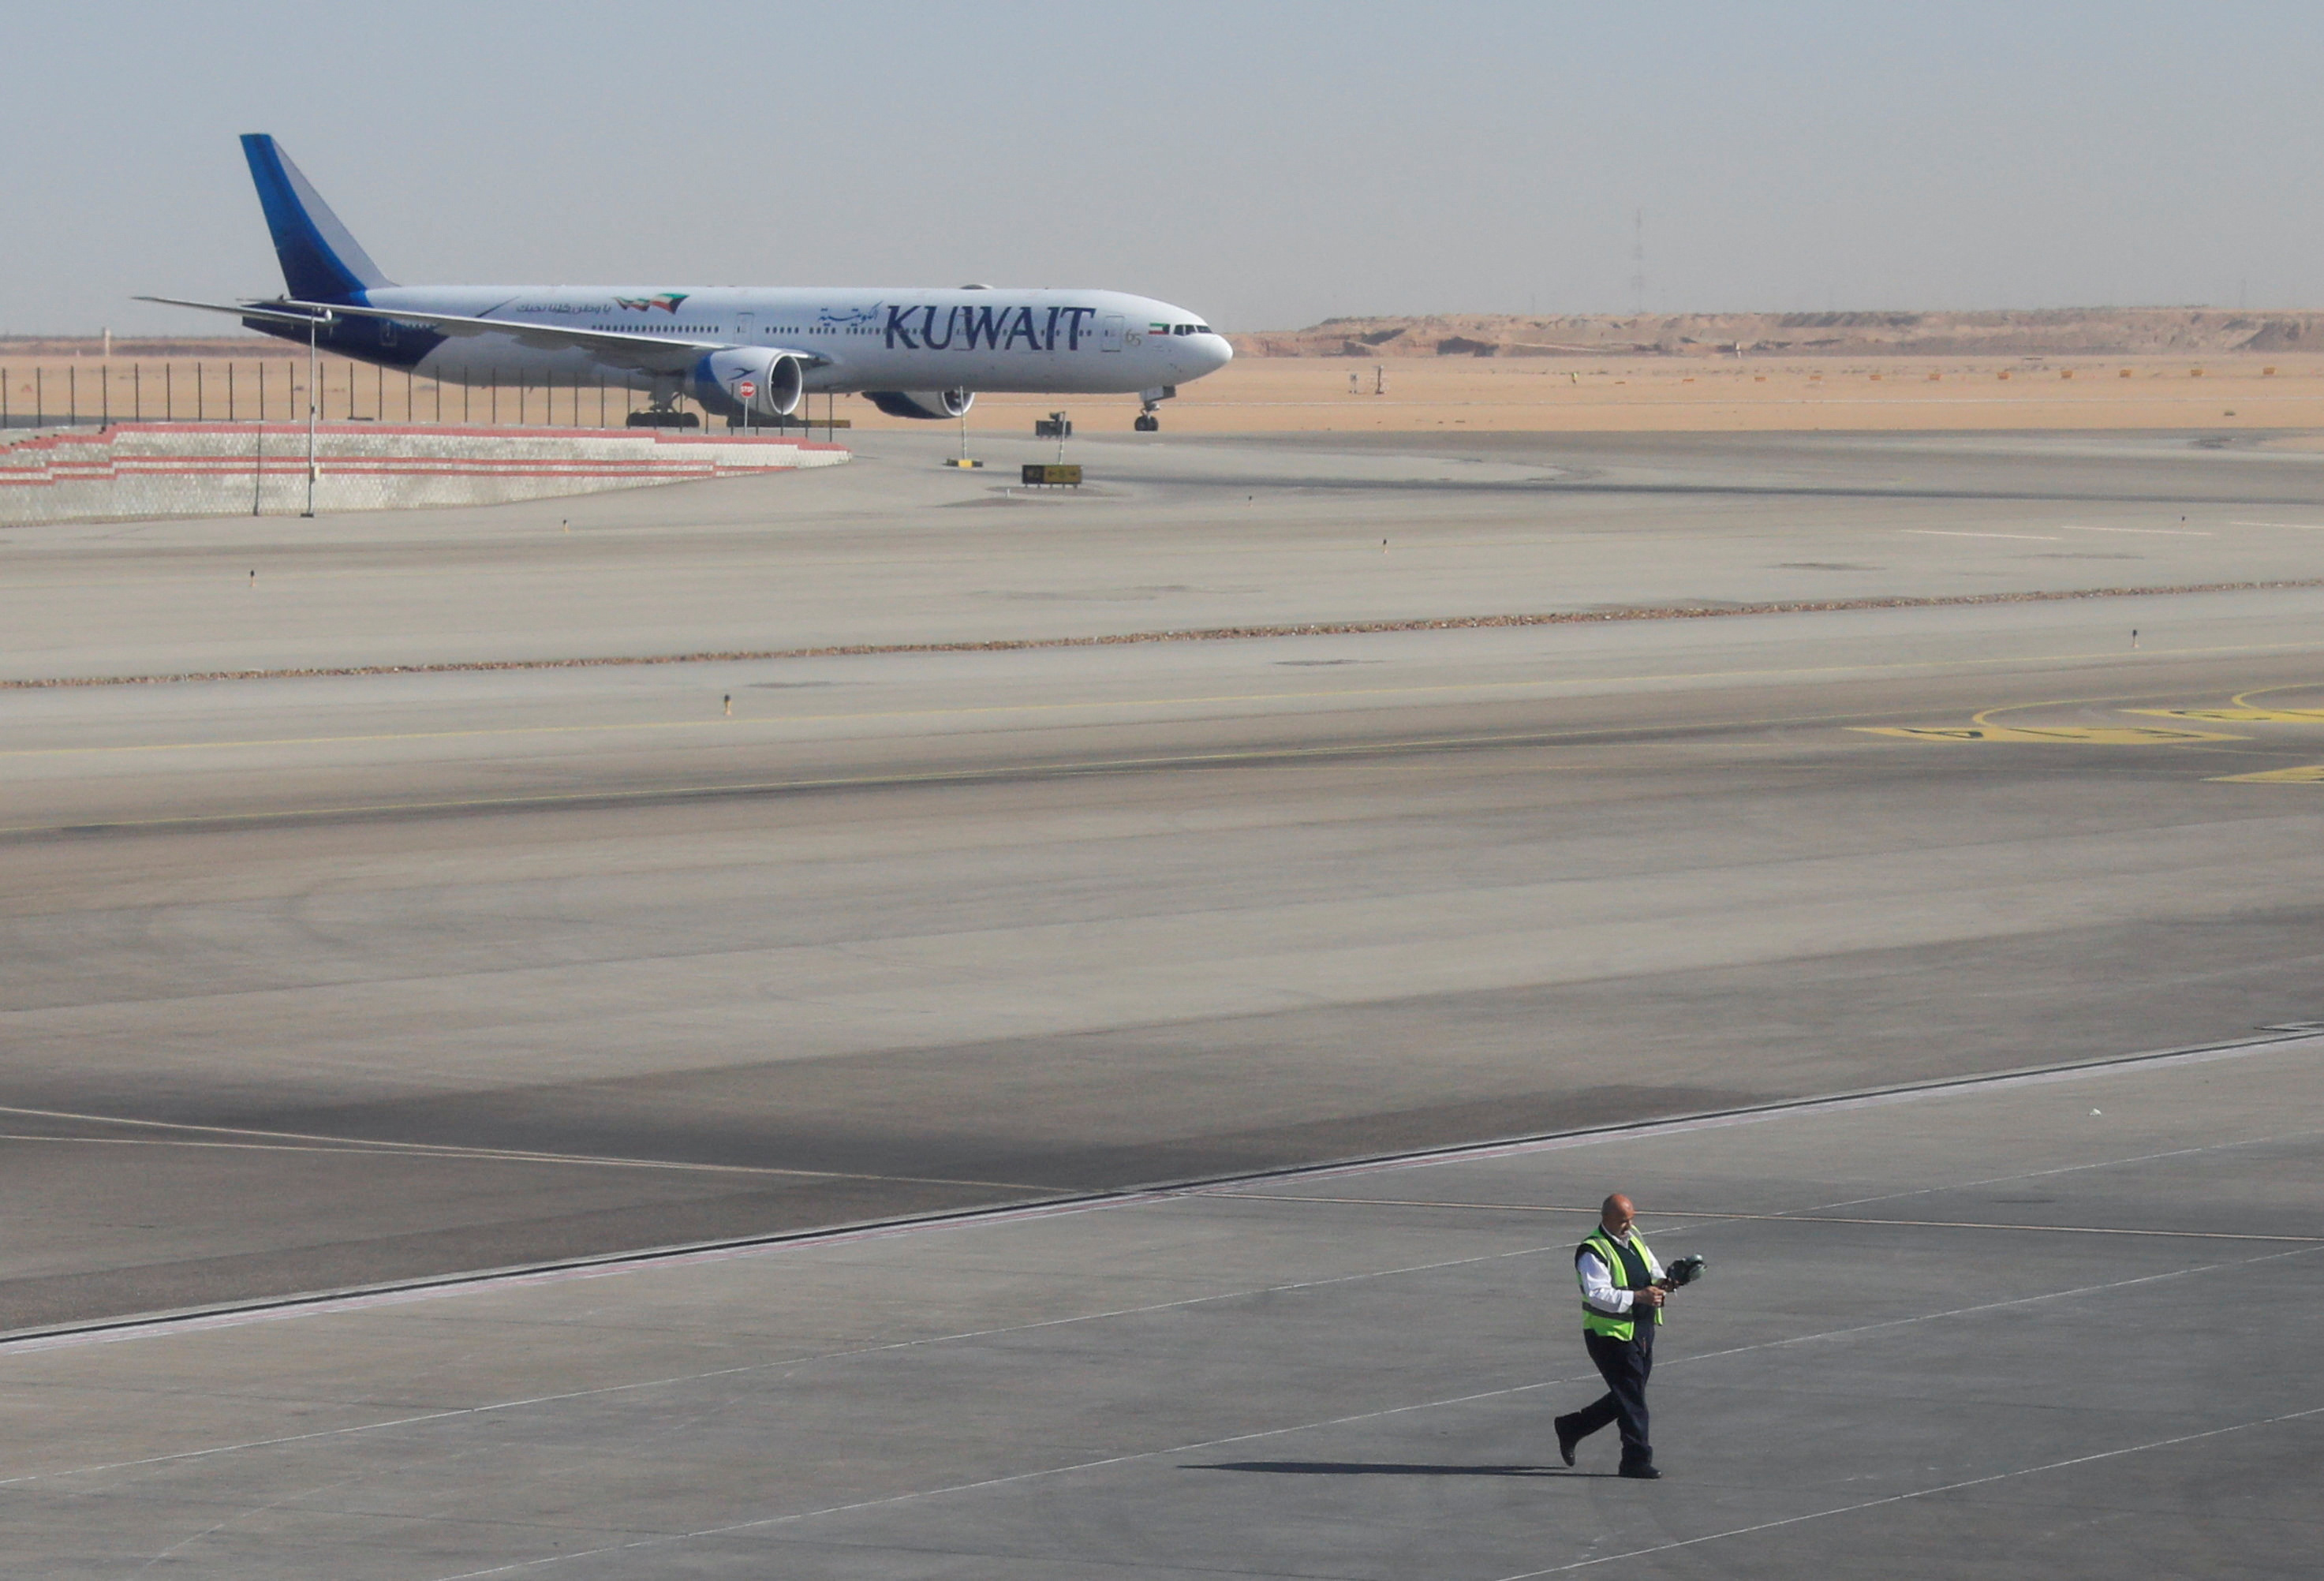 A Kuwait Airways plane seen at Cairo International Airport, Egypt